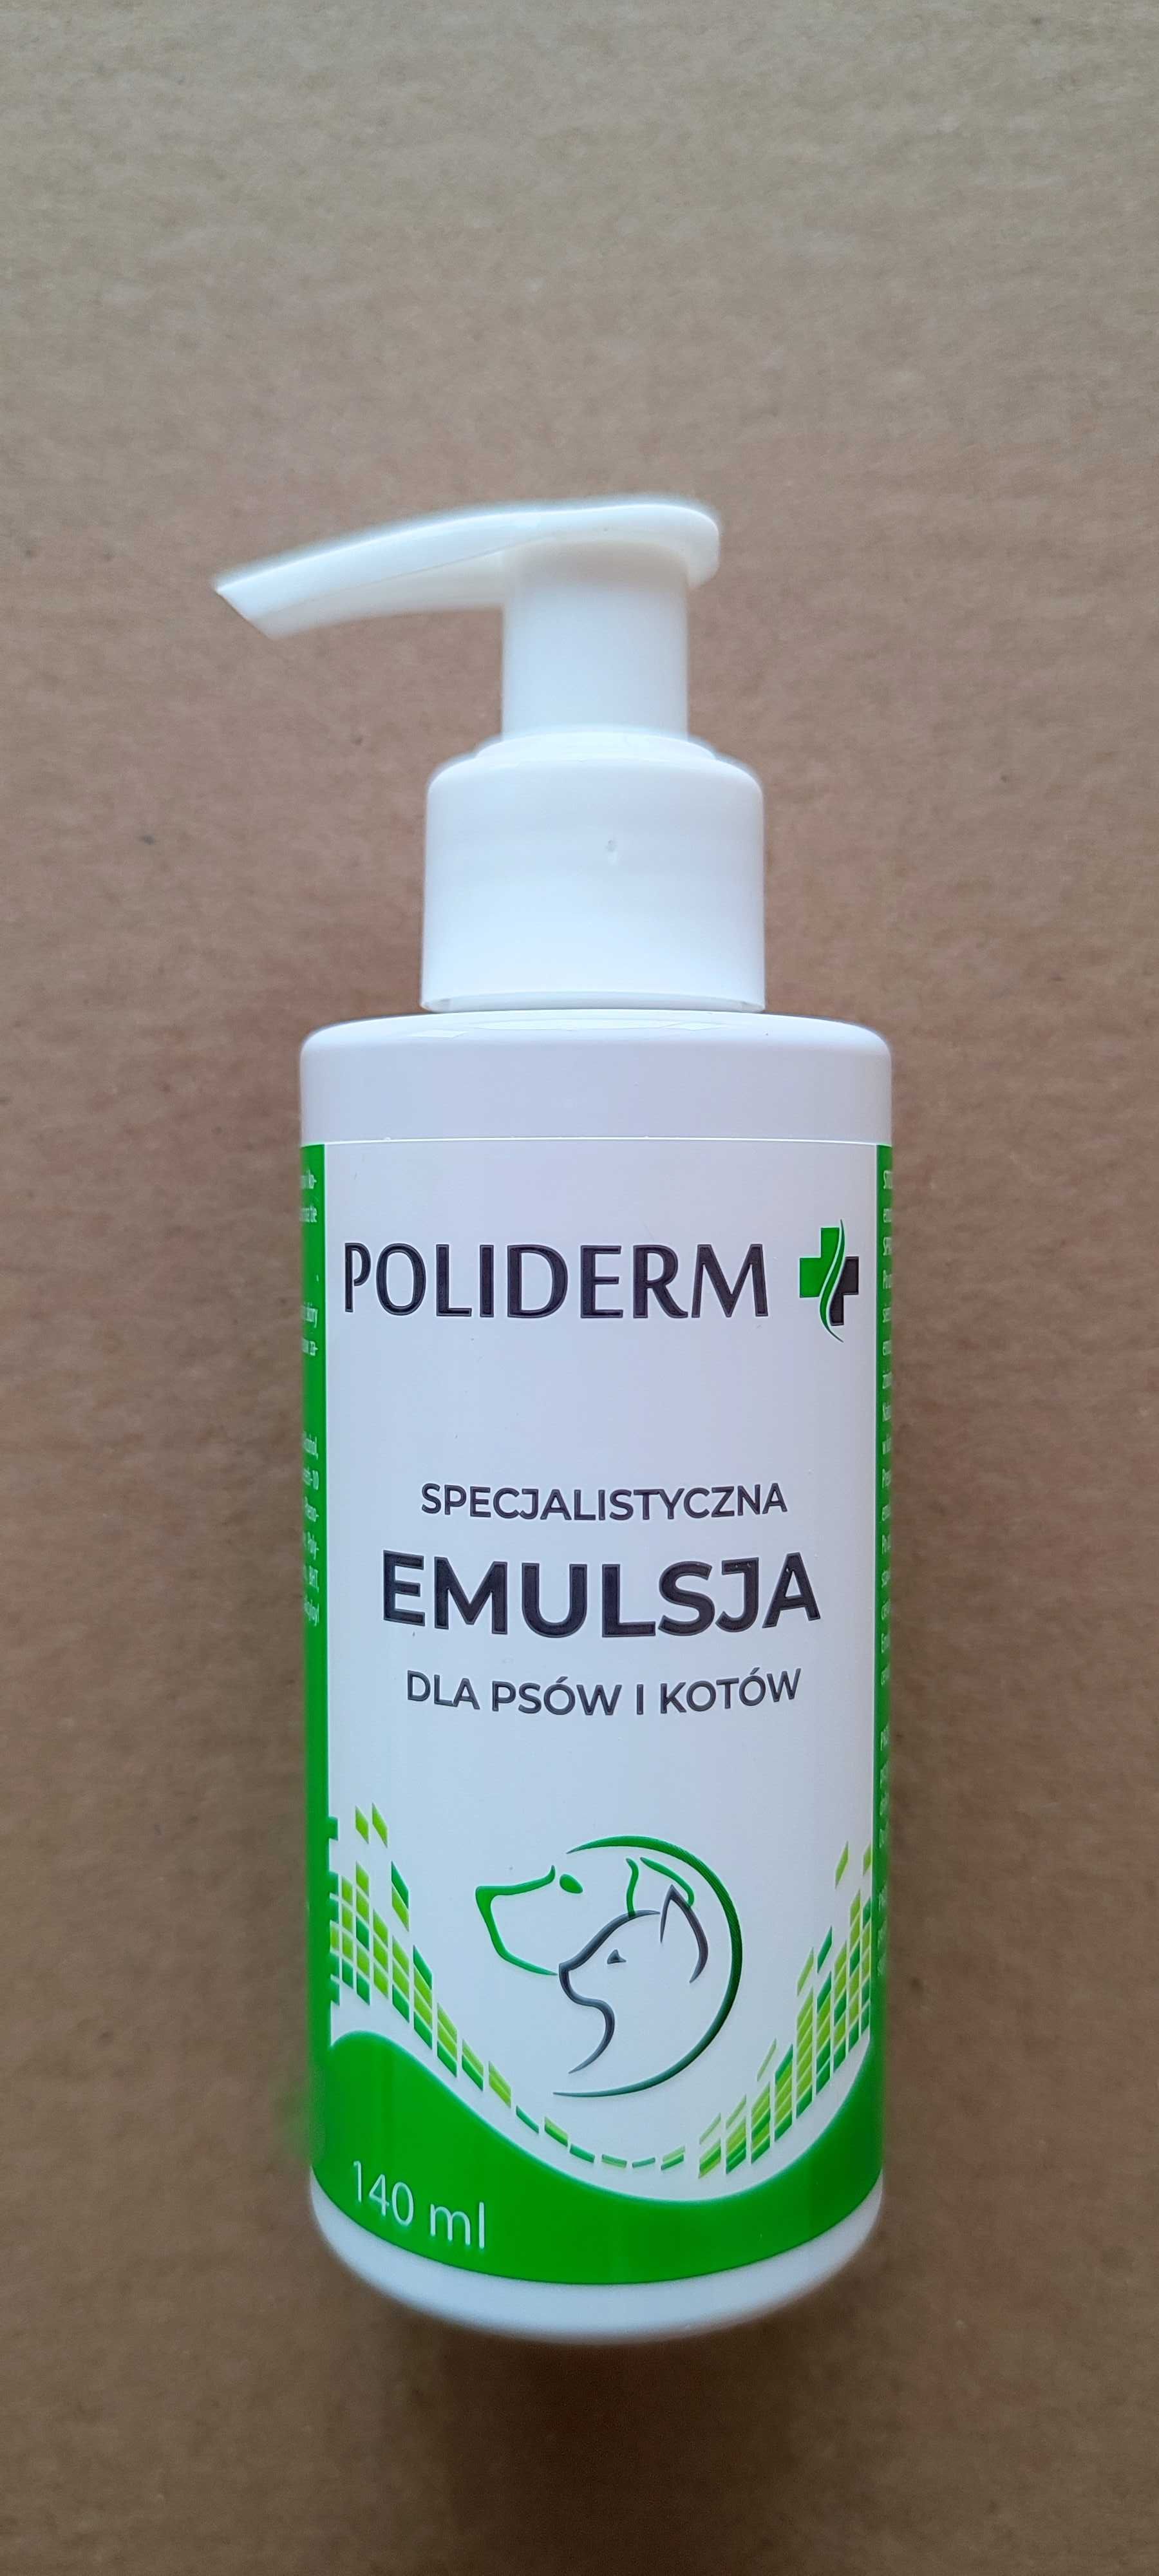 Poliderm Emulsja - 140 ml